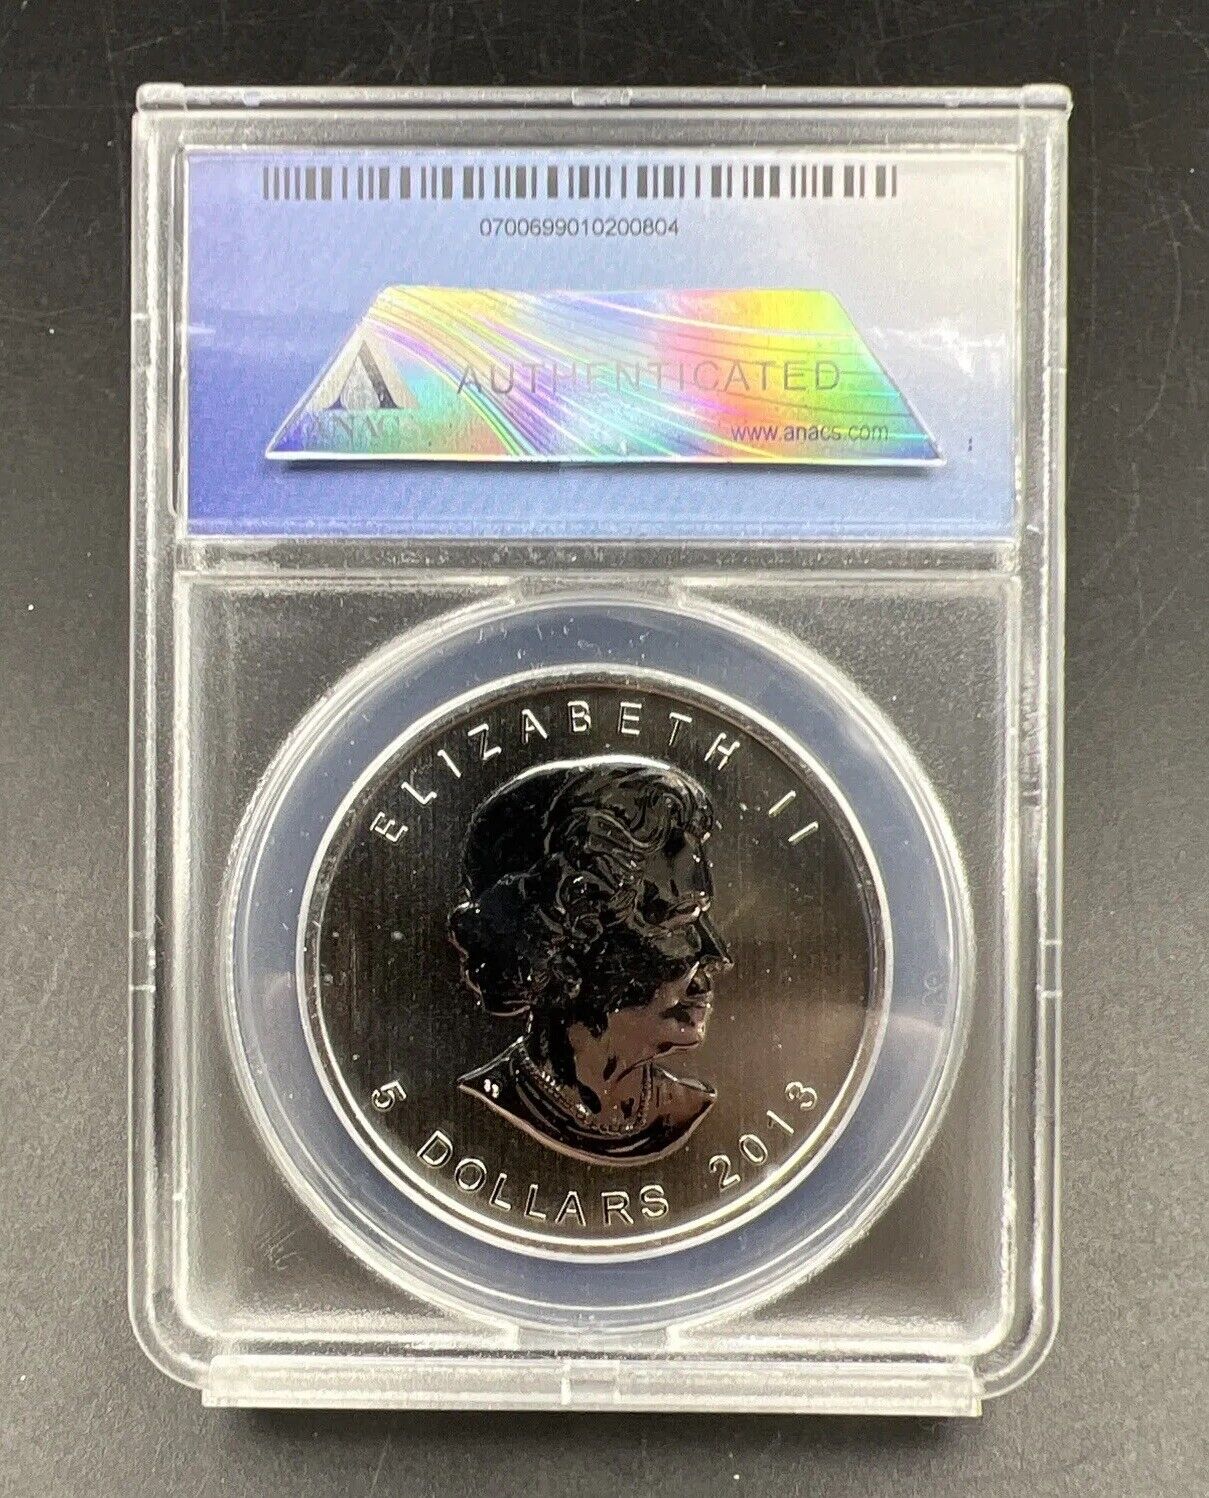 Canada 2013 Silver $5 $5.00 ANACS MS69 Maple Leaf 1 Oz .9999 25th Anniversary FS